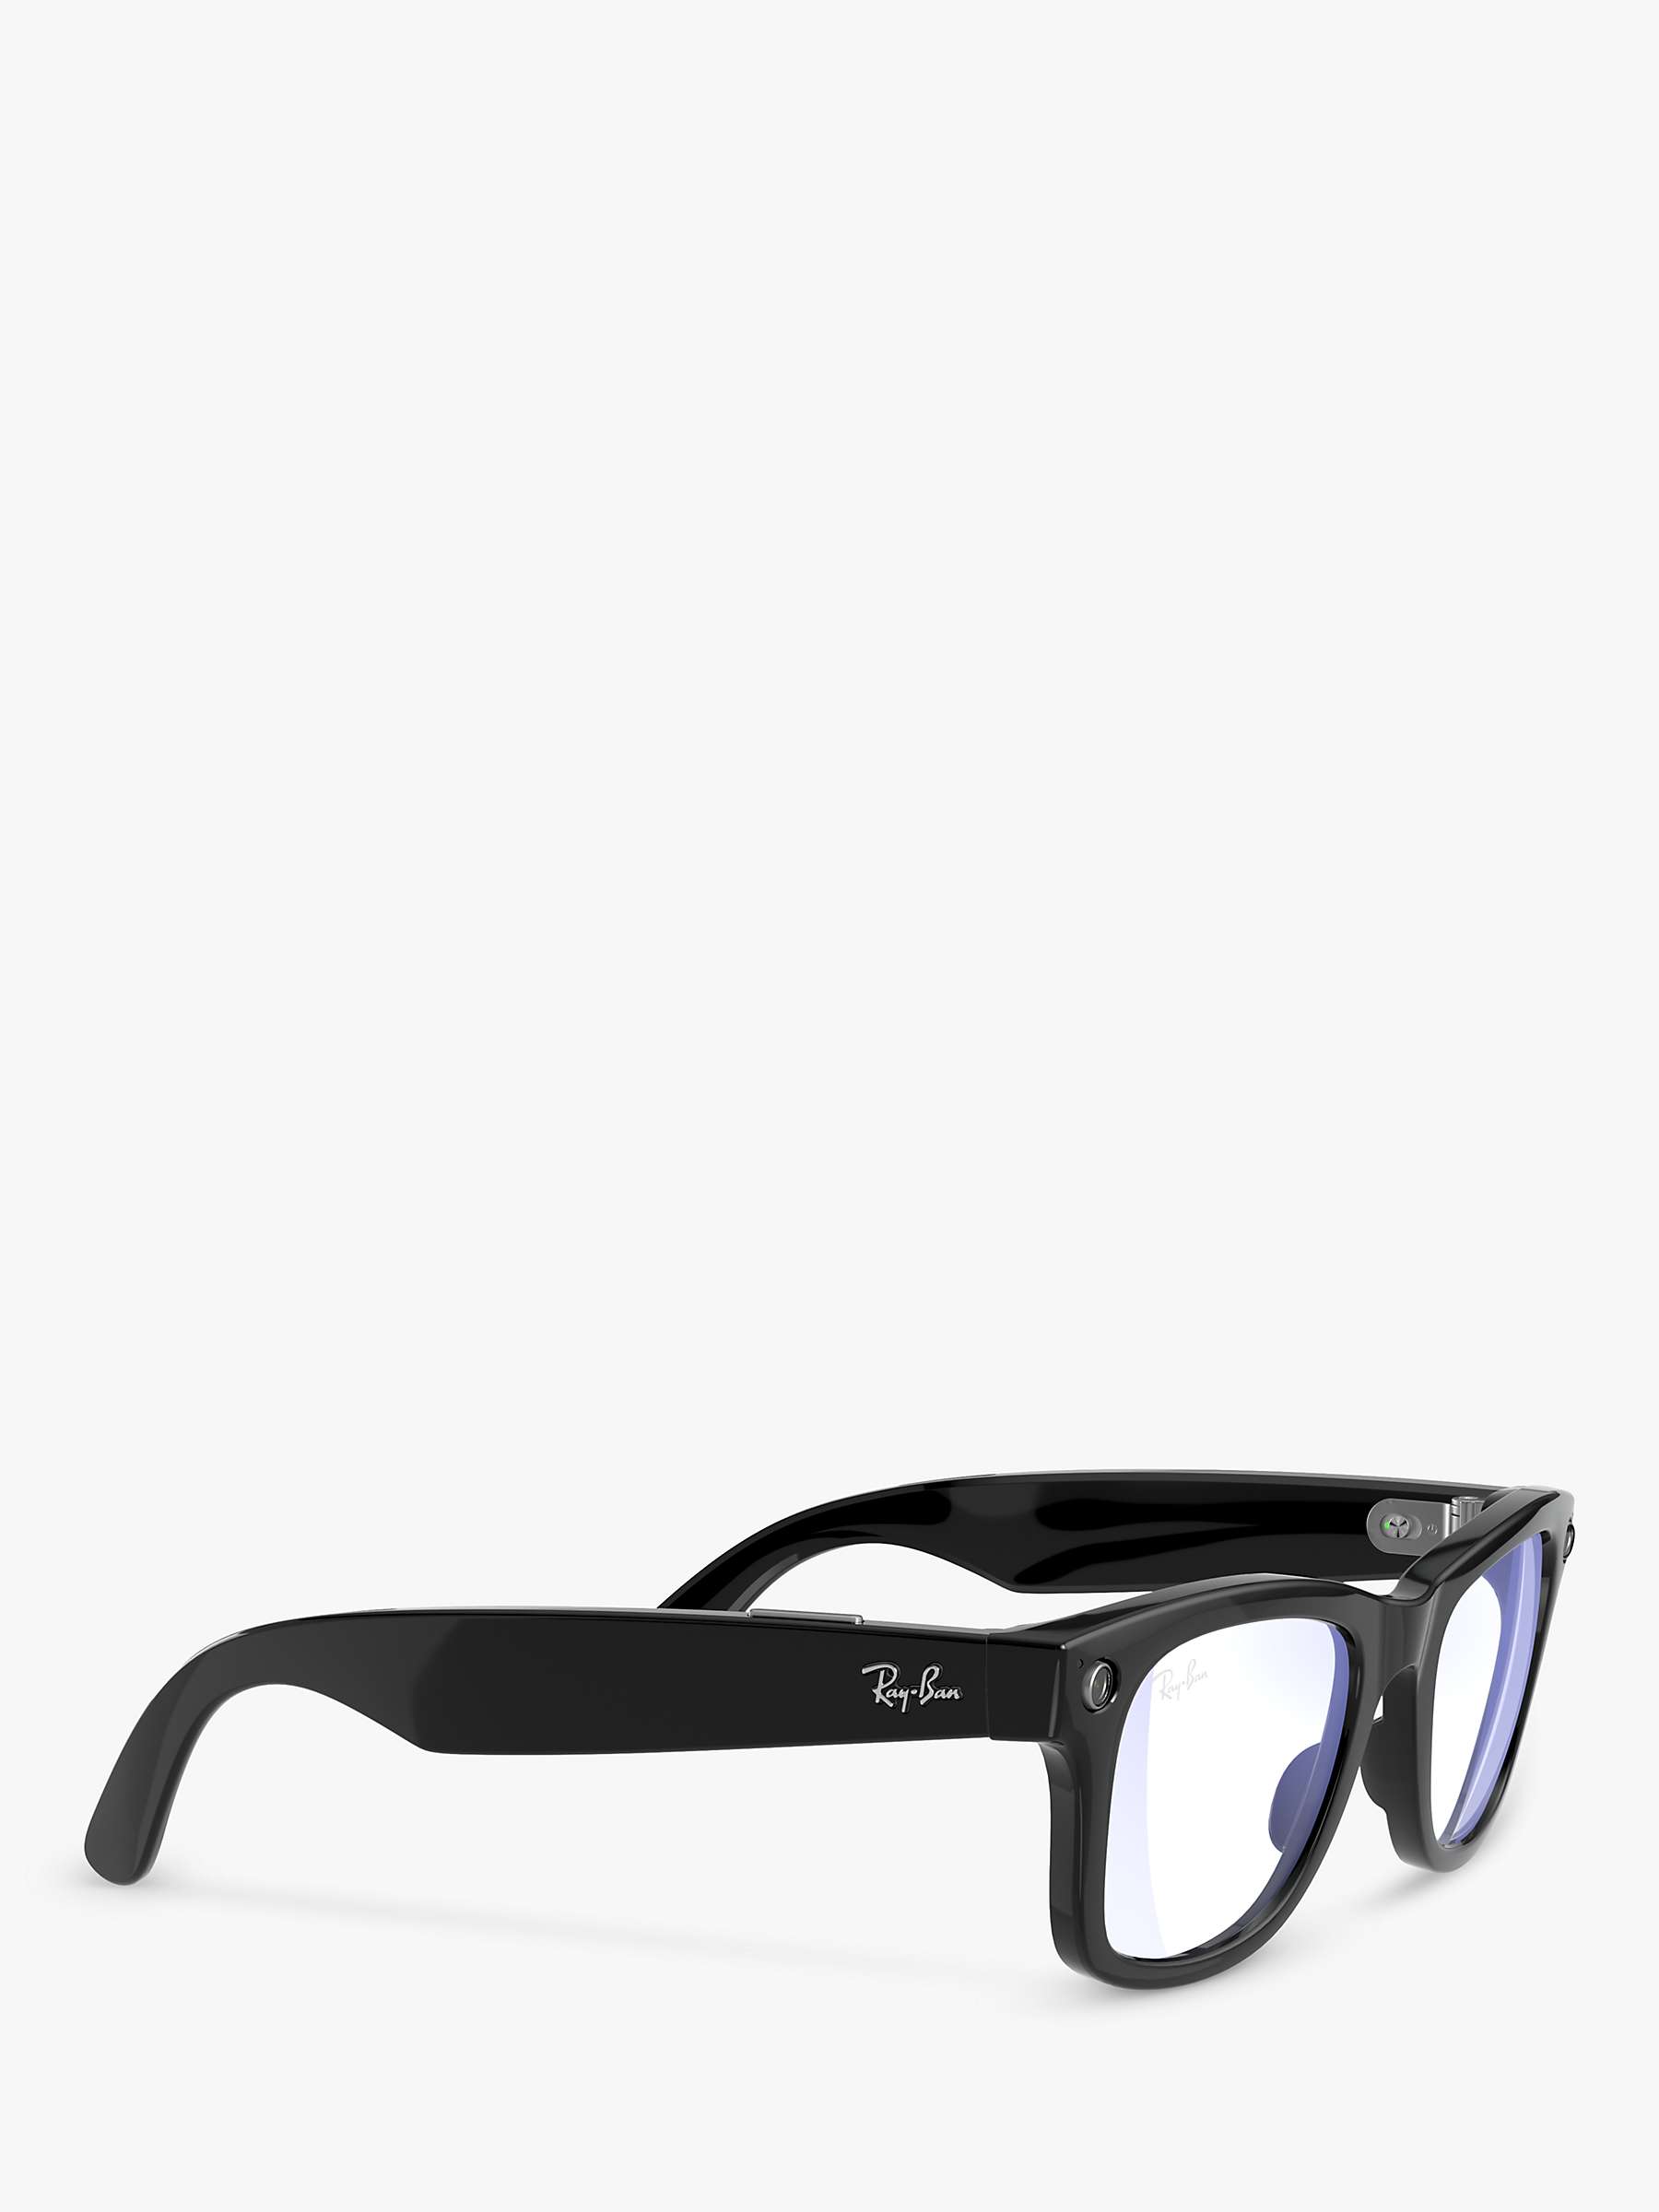 Buy Ray-Ban Stories Wayfarer Smart Sunglasses, Shiny Black/Clear Online at johnlewis.com